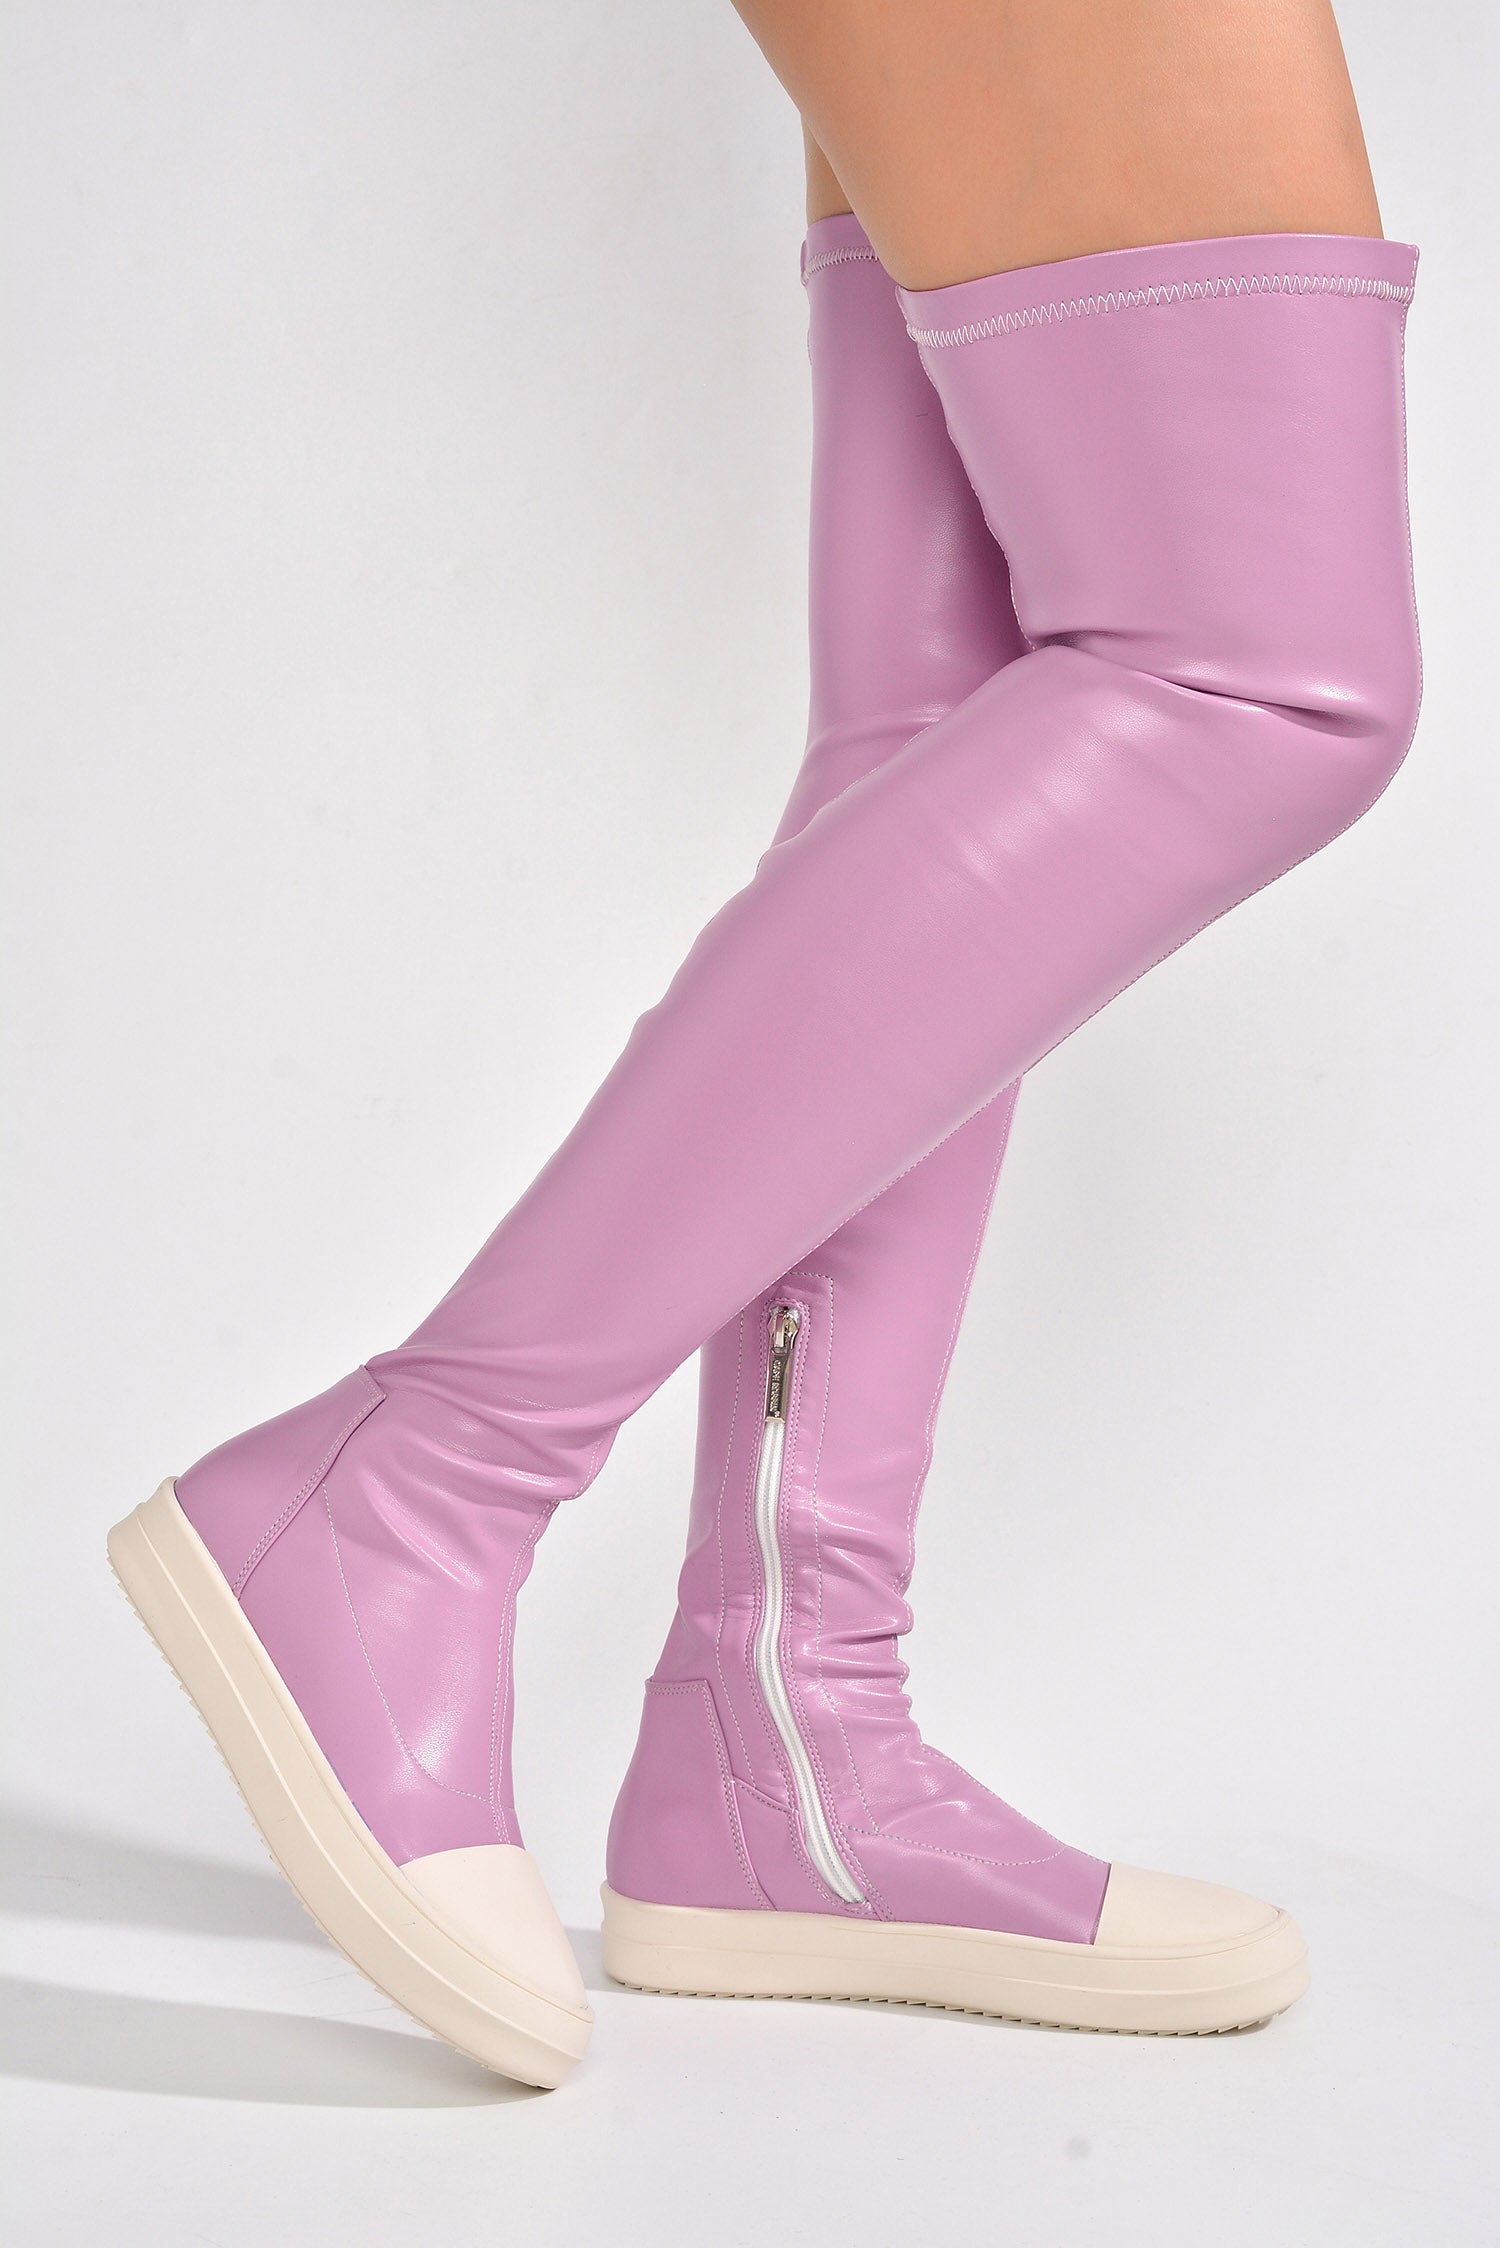 UrbanOG - Lupita Thigh High Lug Sole Flat Boots - BOOTS